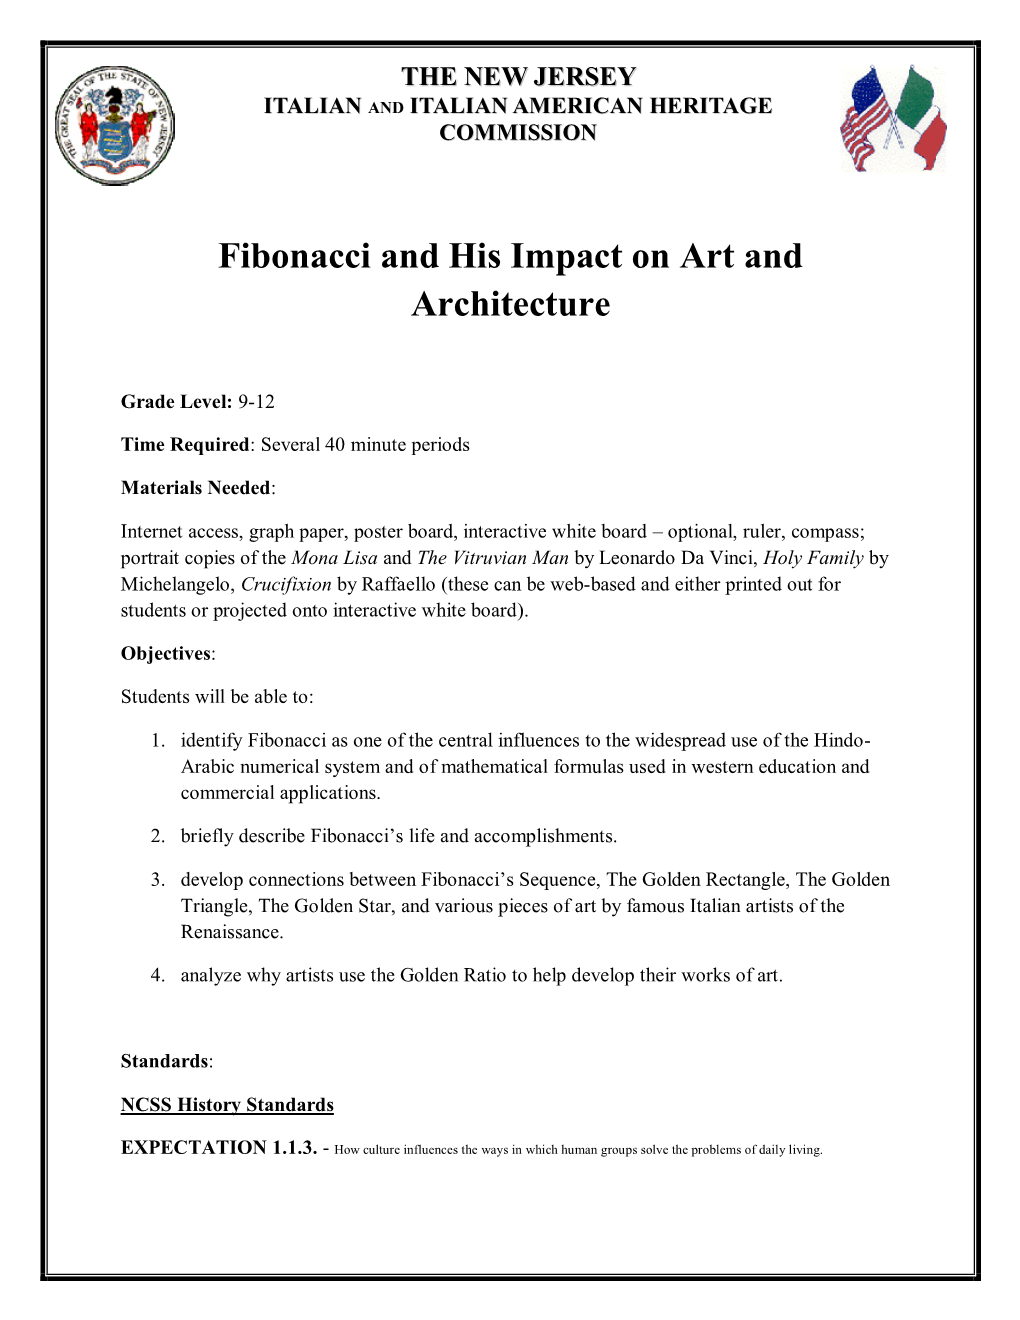 Fibonacci and His Impact on Art and Architecture